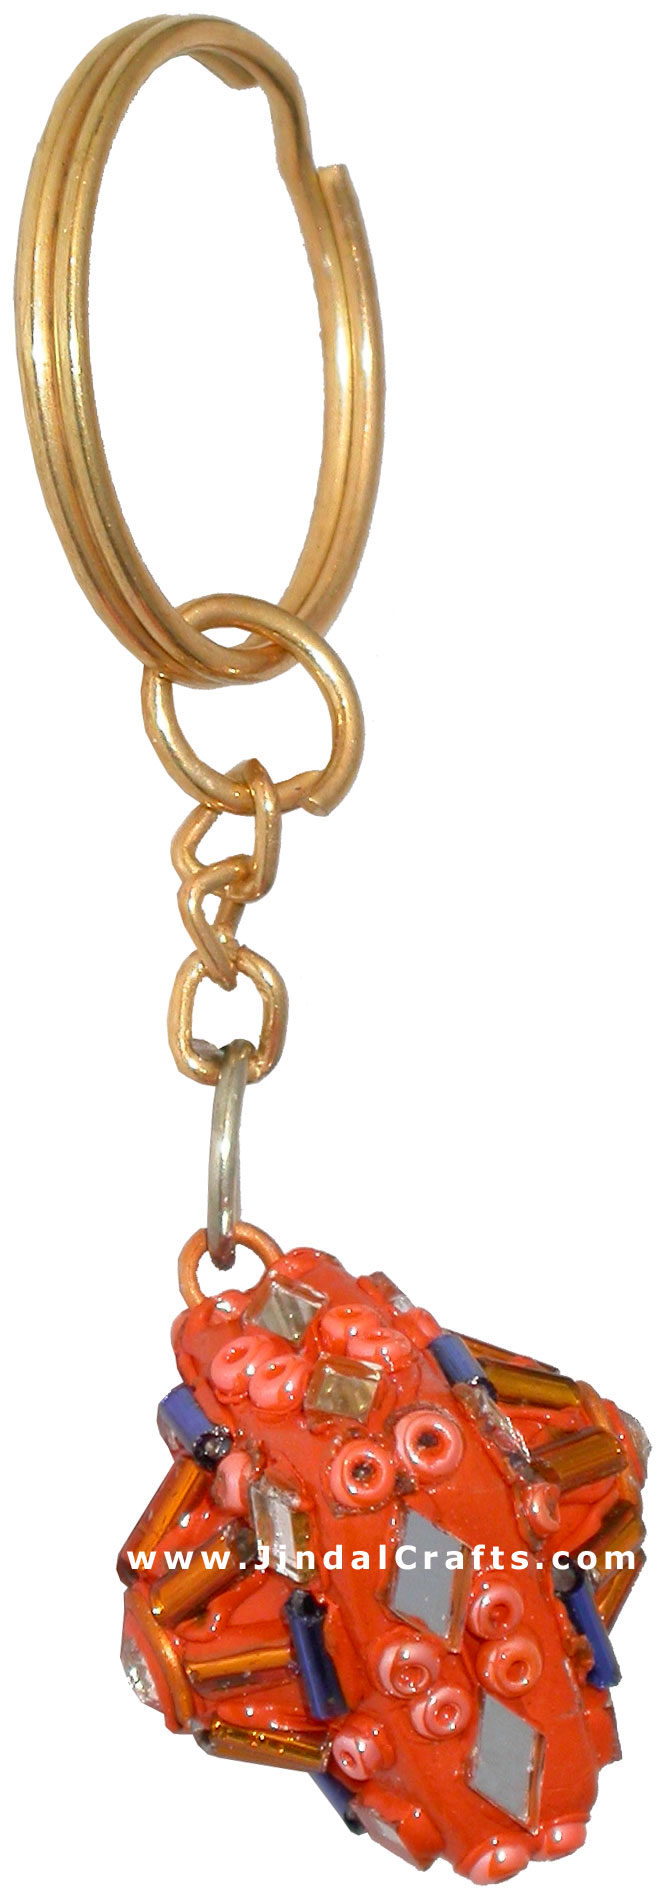 Handmade Colorful Lac Key Chain Key Ring Indian Art